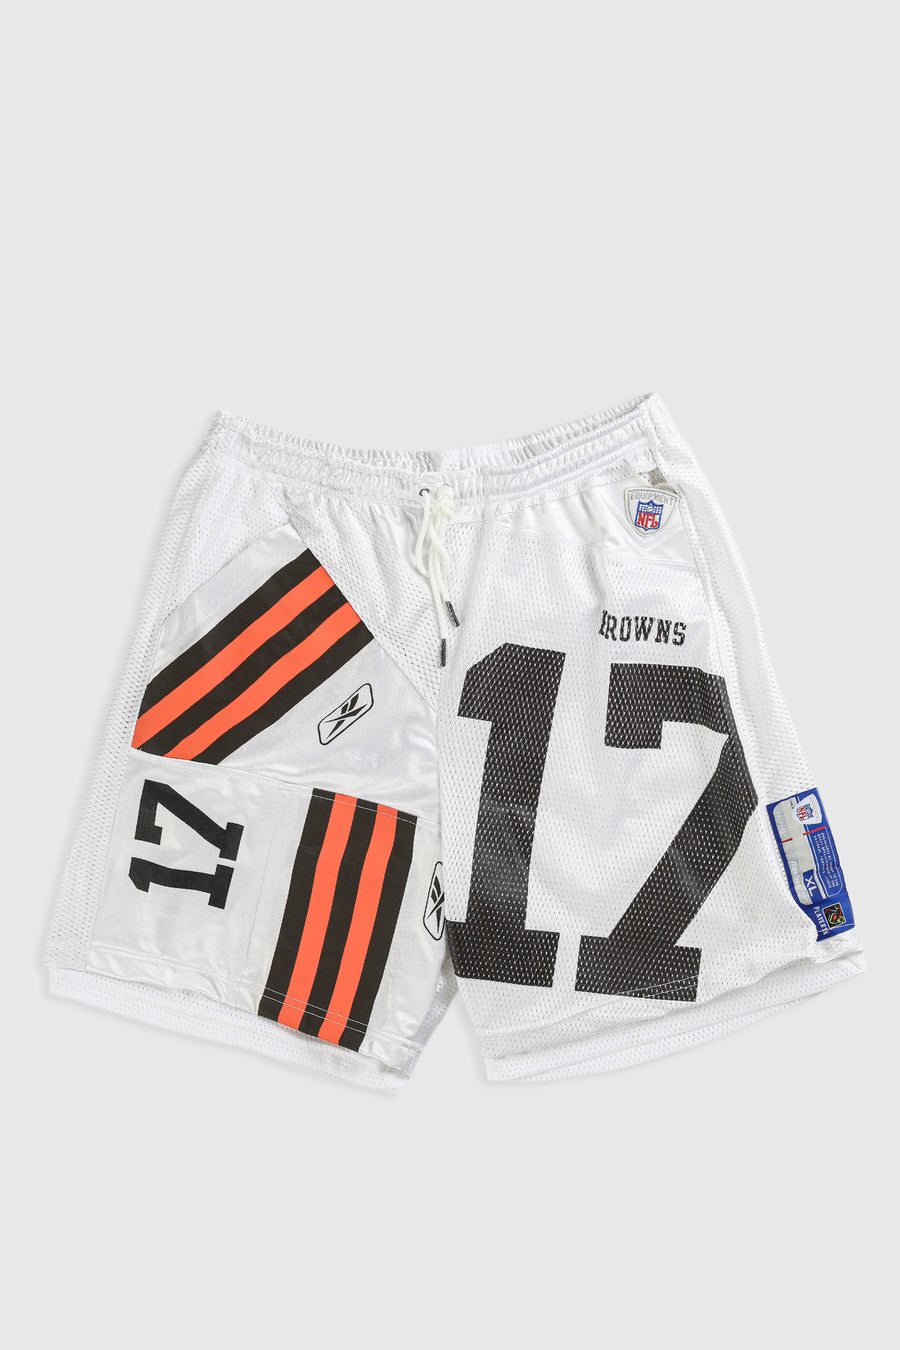 Unisex Rework Browns NFL Jersey Shorts - L